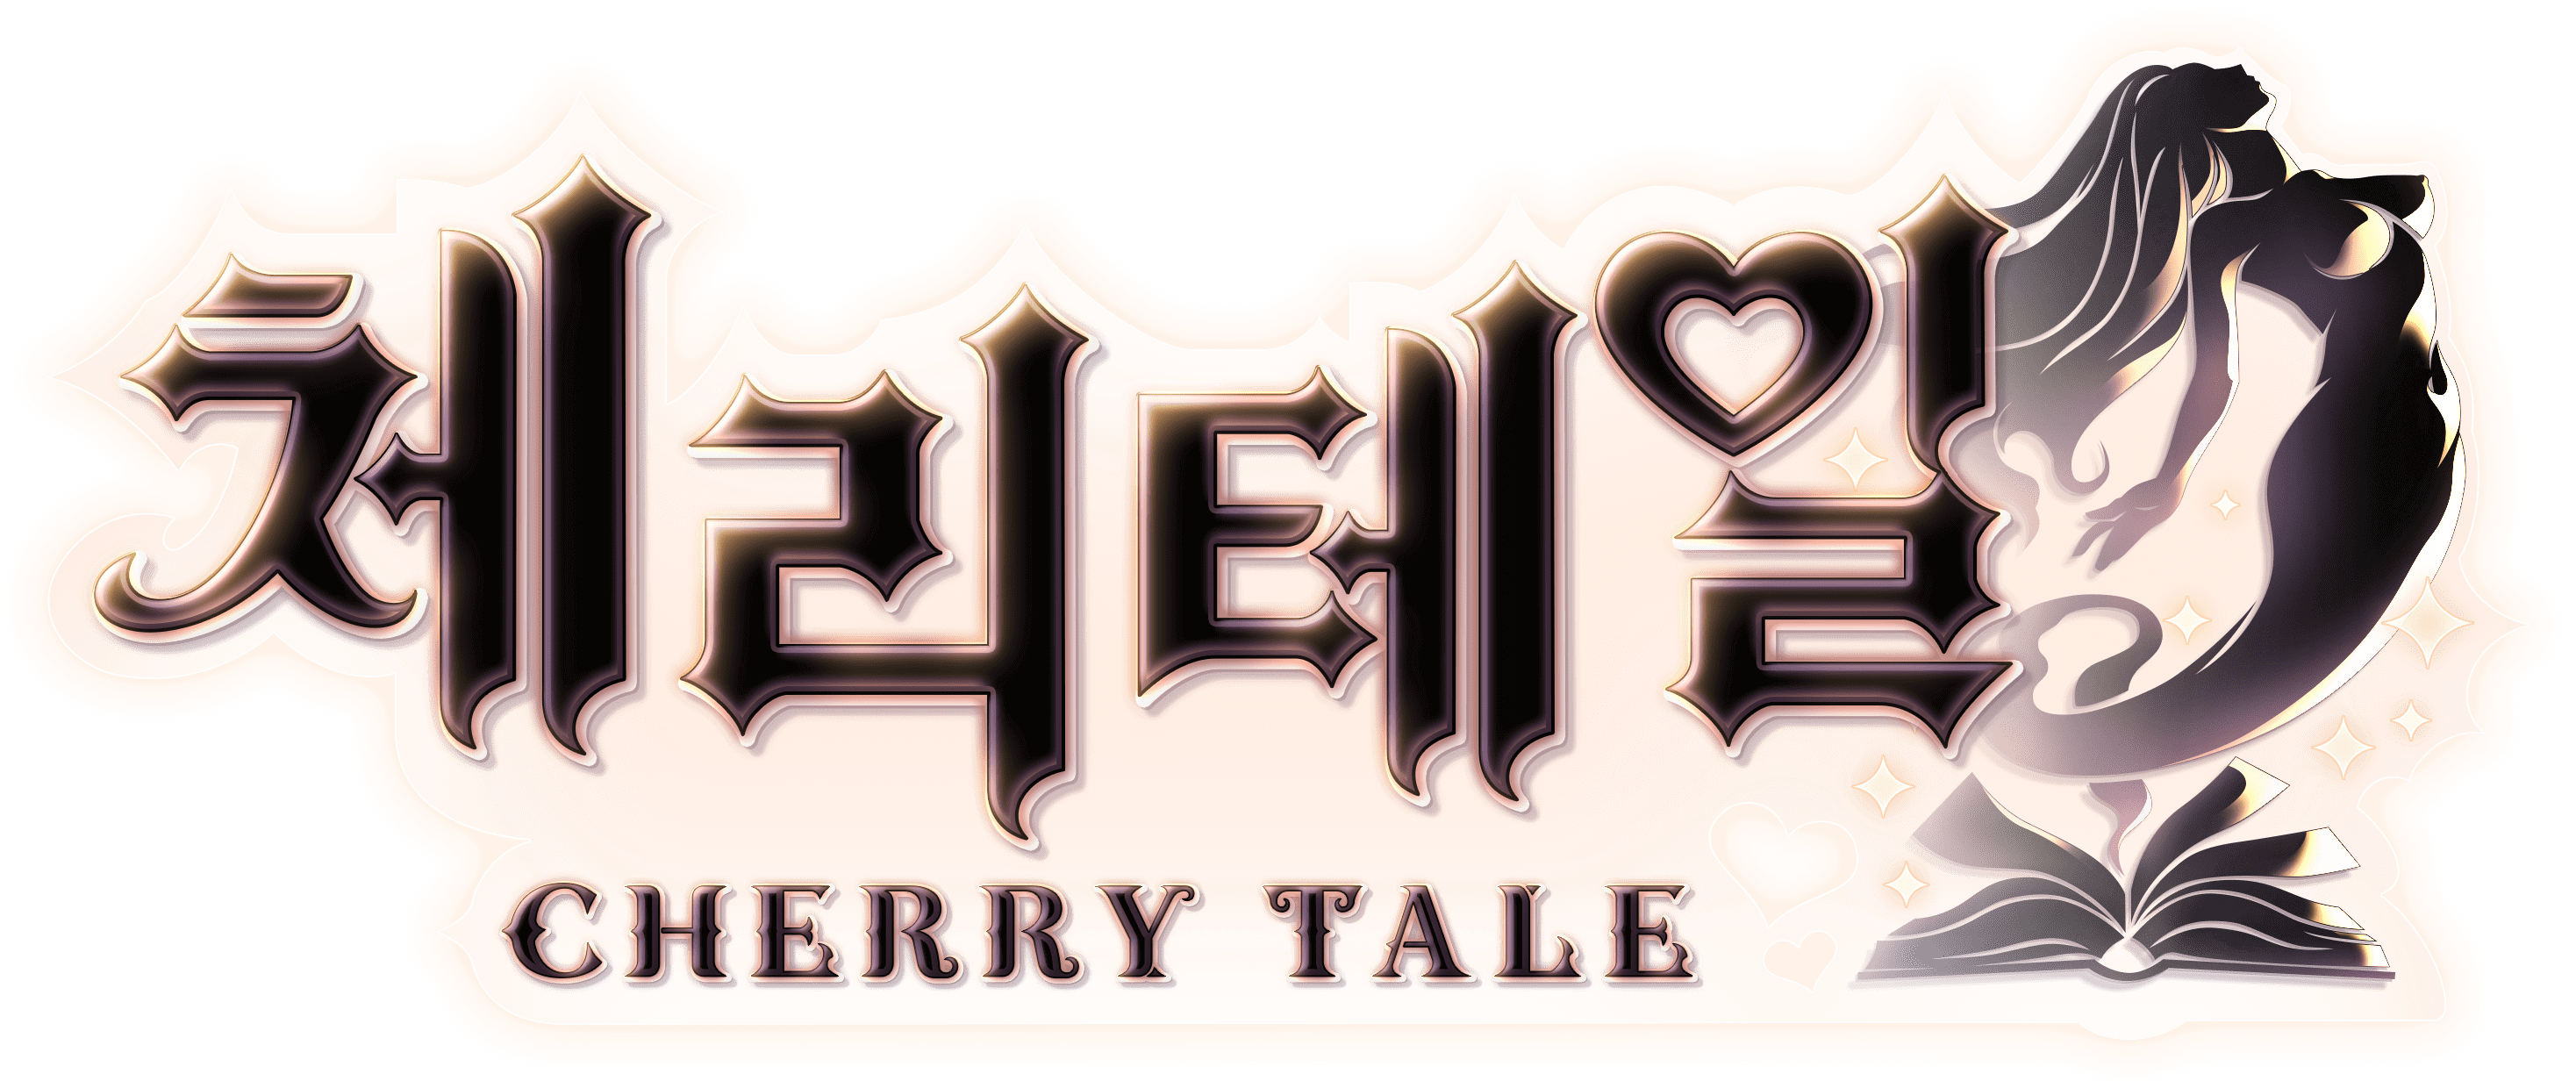 Cherry Tale